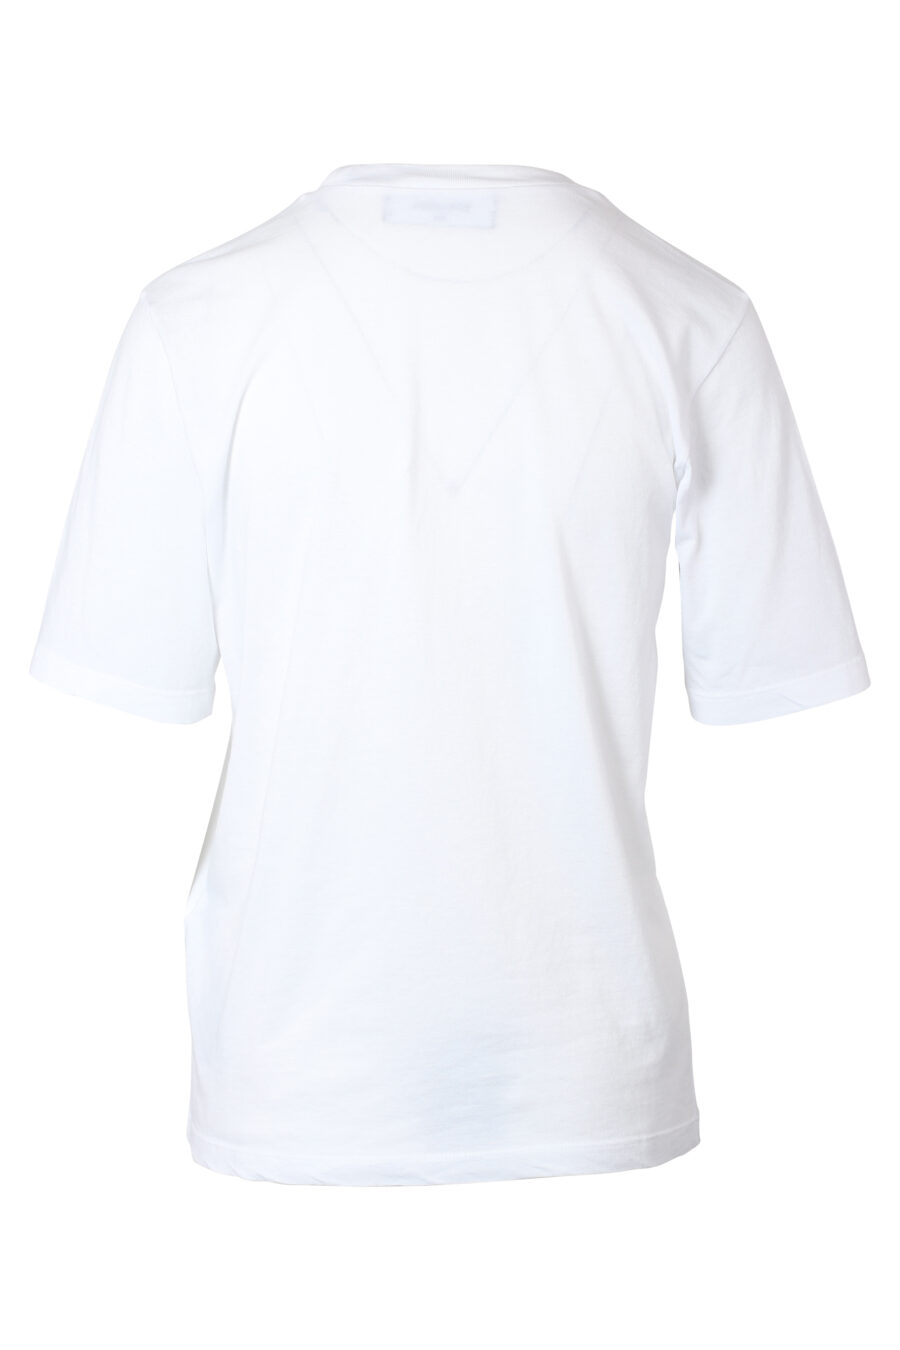 Camiseta blanca con maxilogo multicolor - IMG 9782